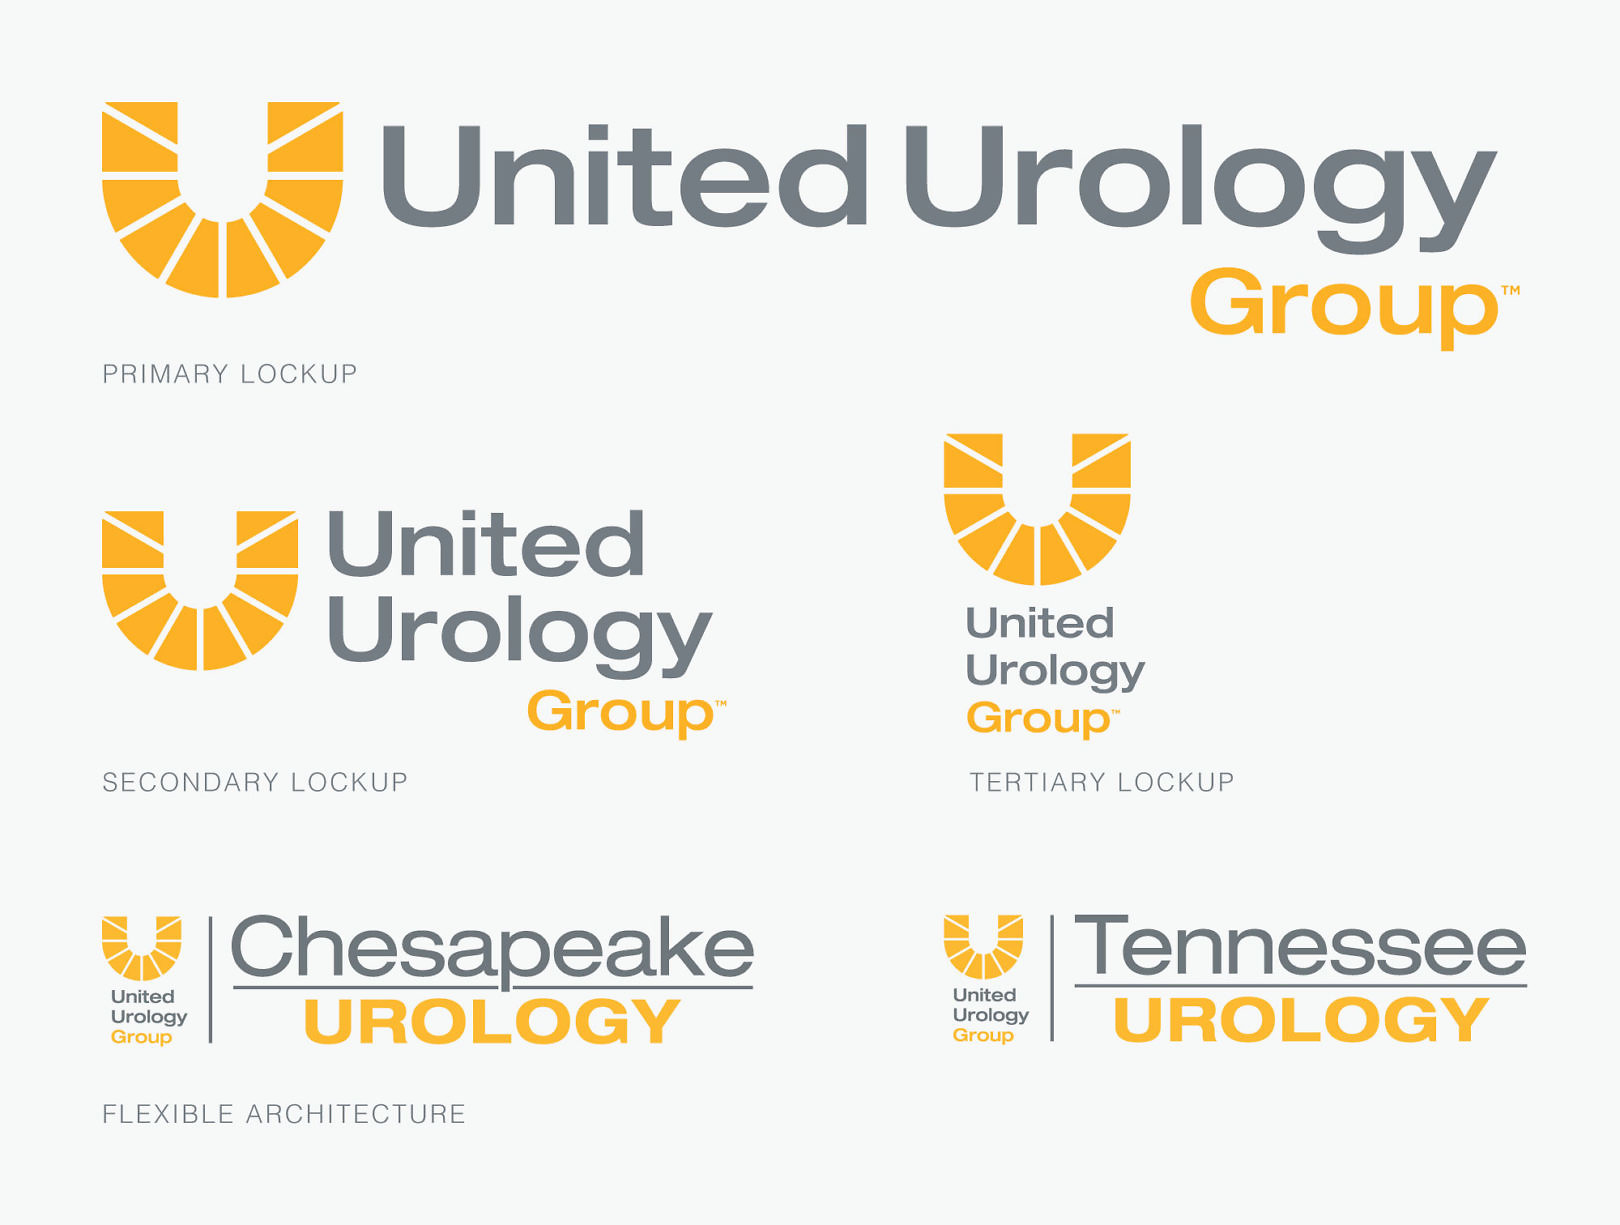 United Urology Group | Cue